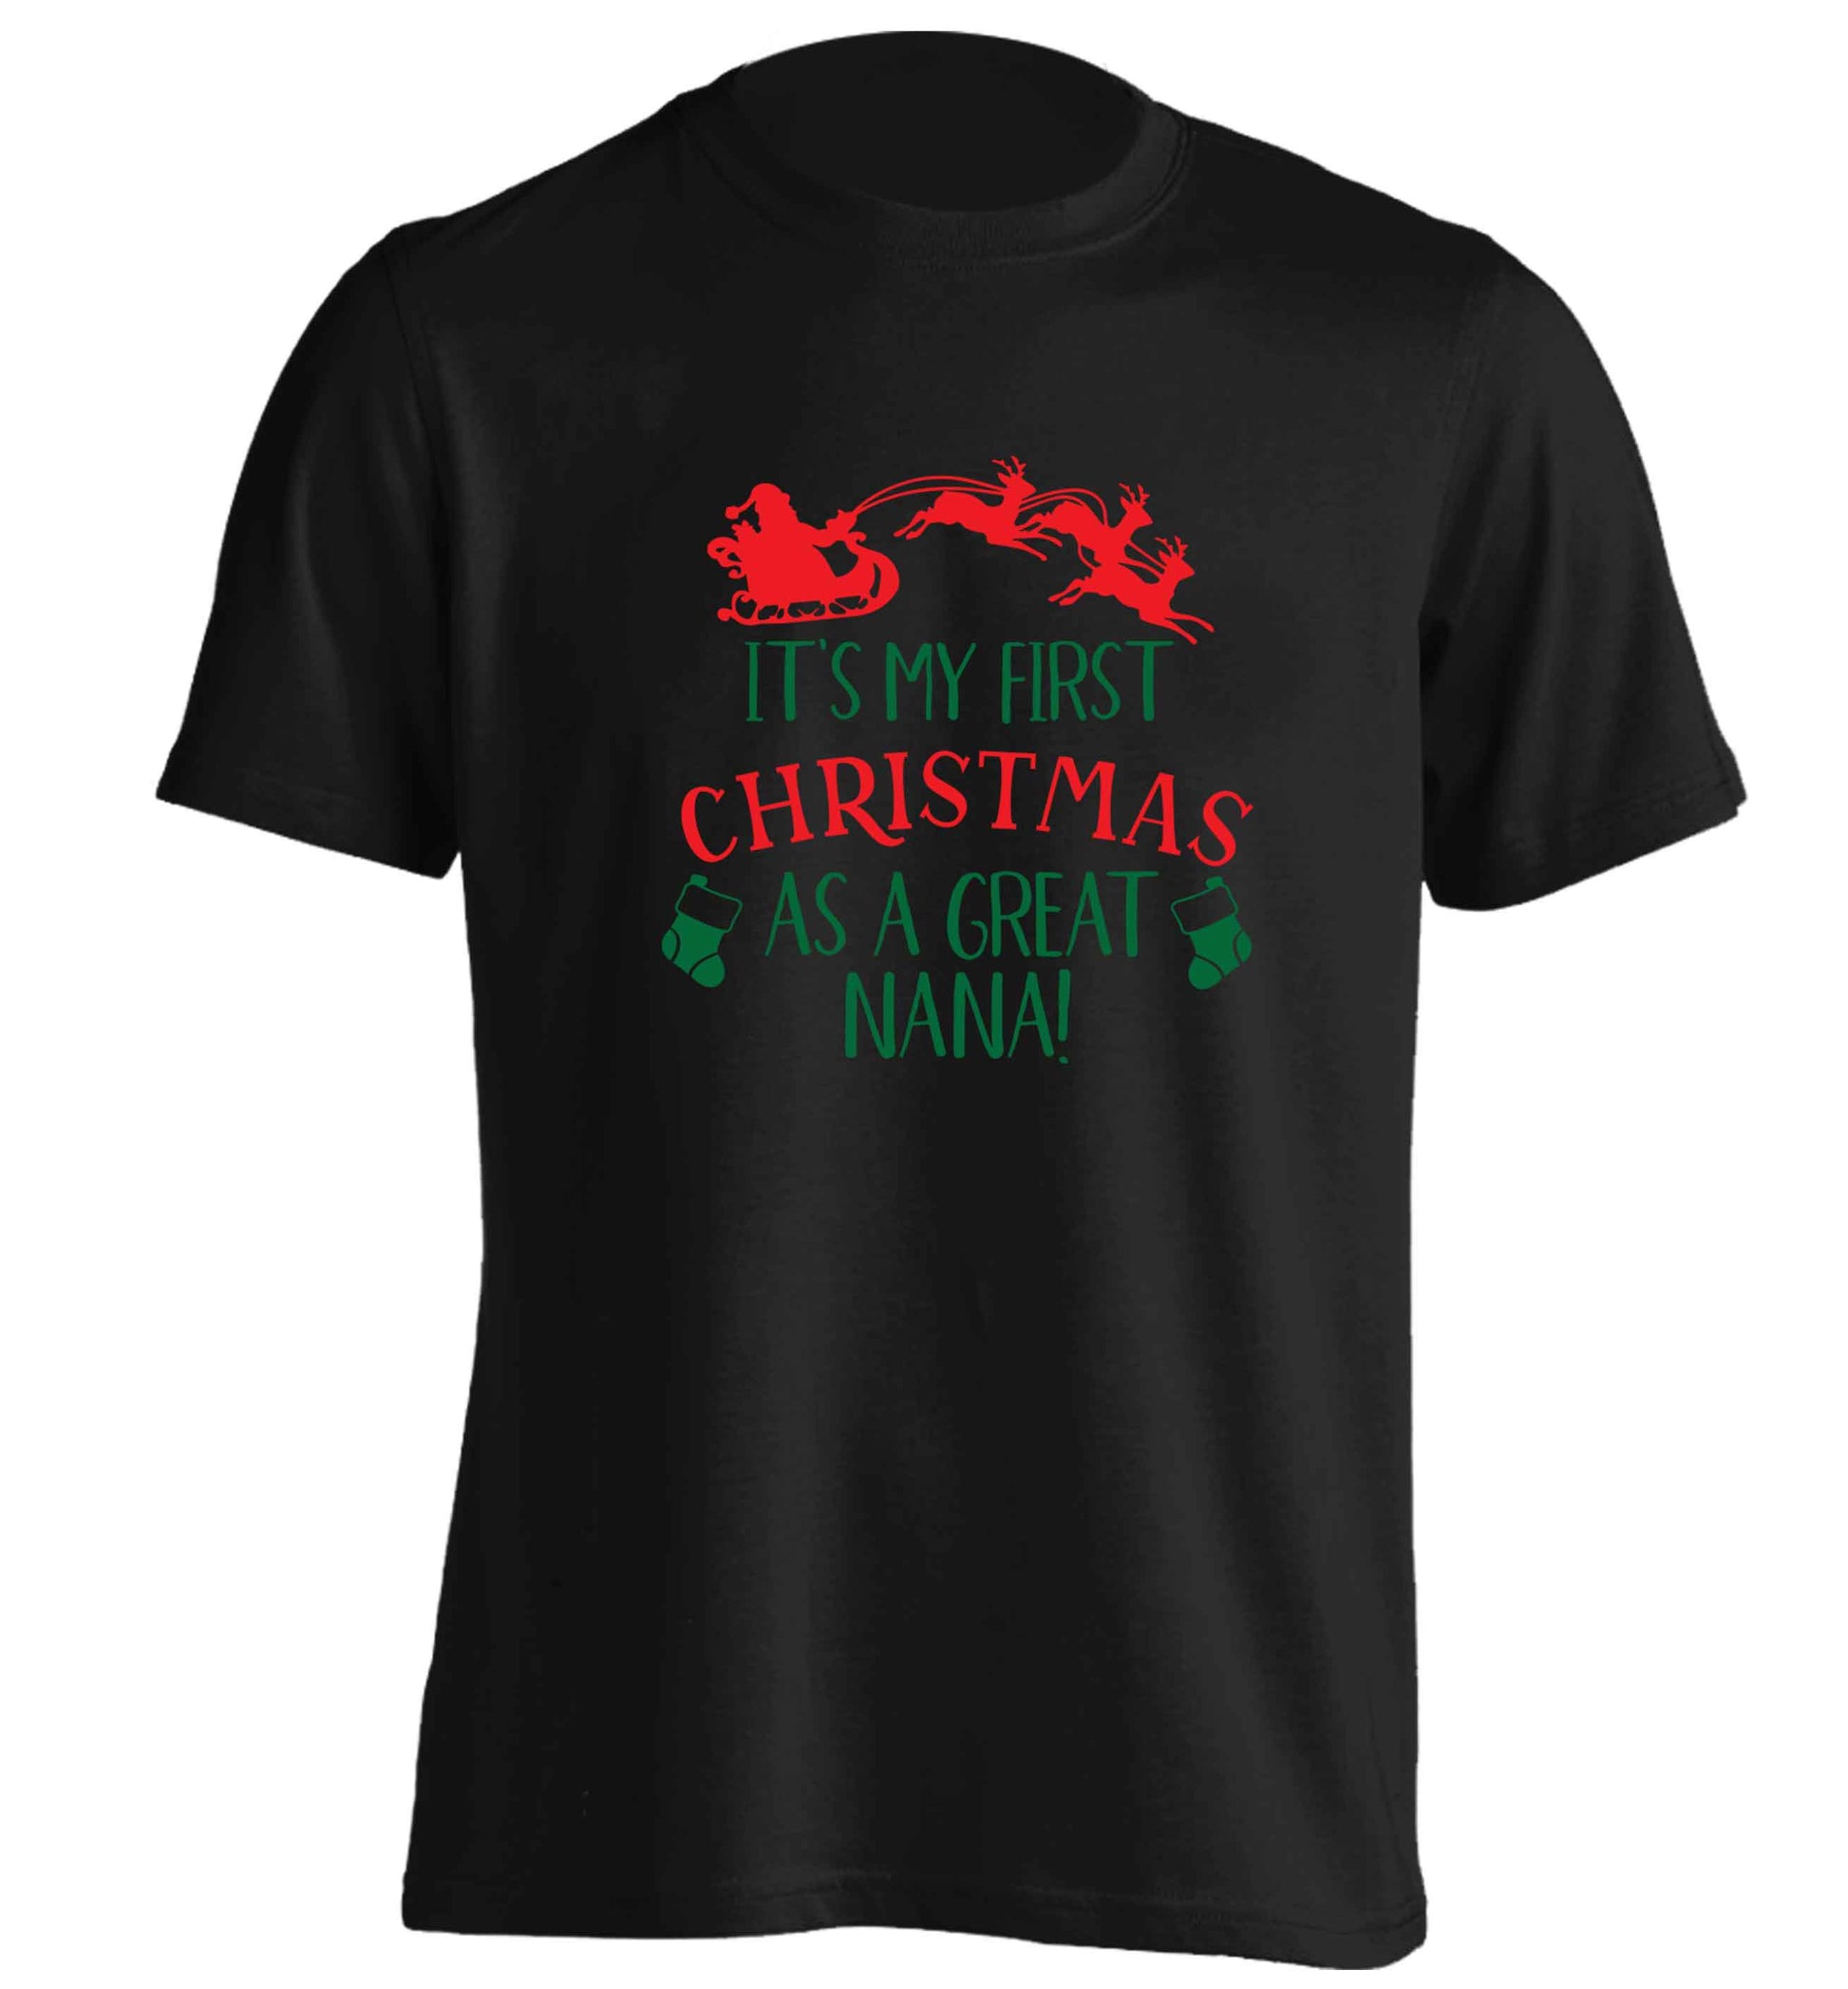 It's my first Christmas as a great nana! adults unisex black Tshirt 2XL